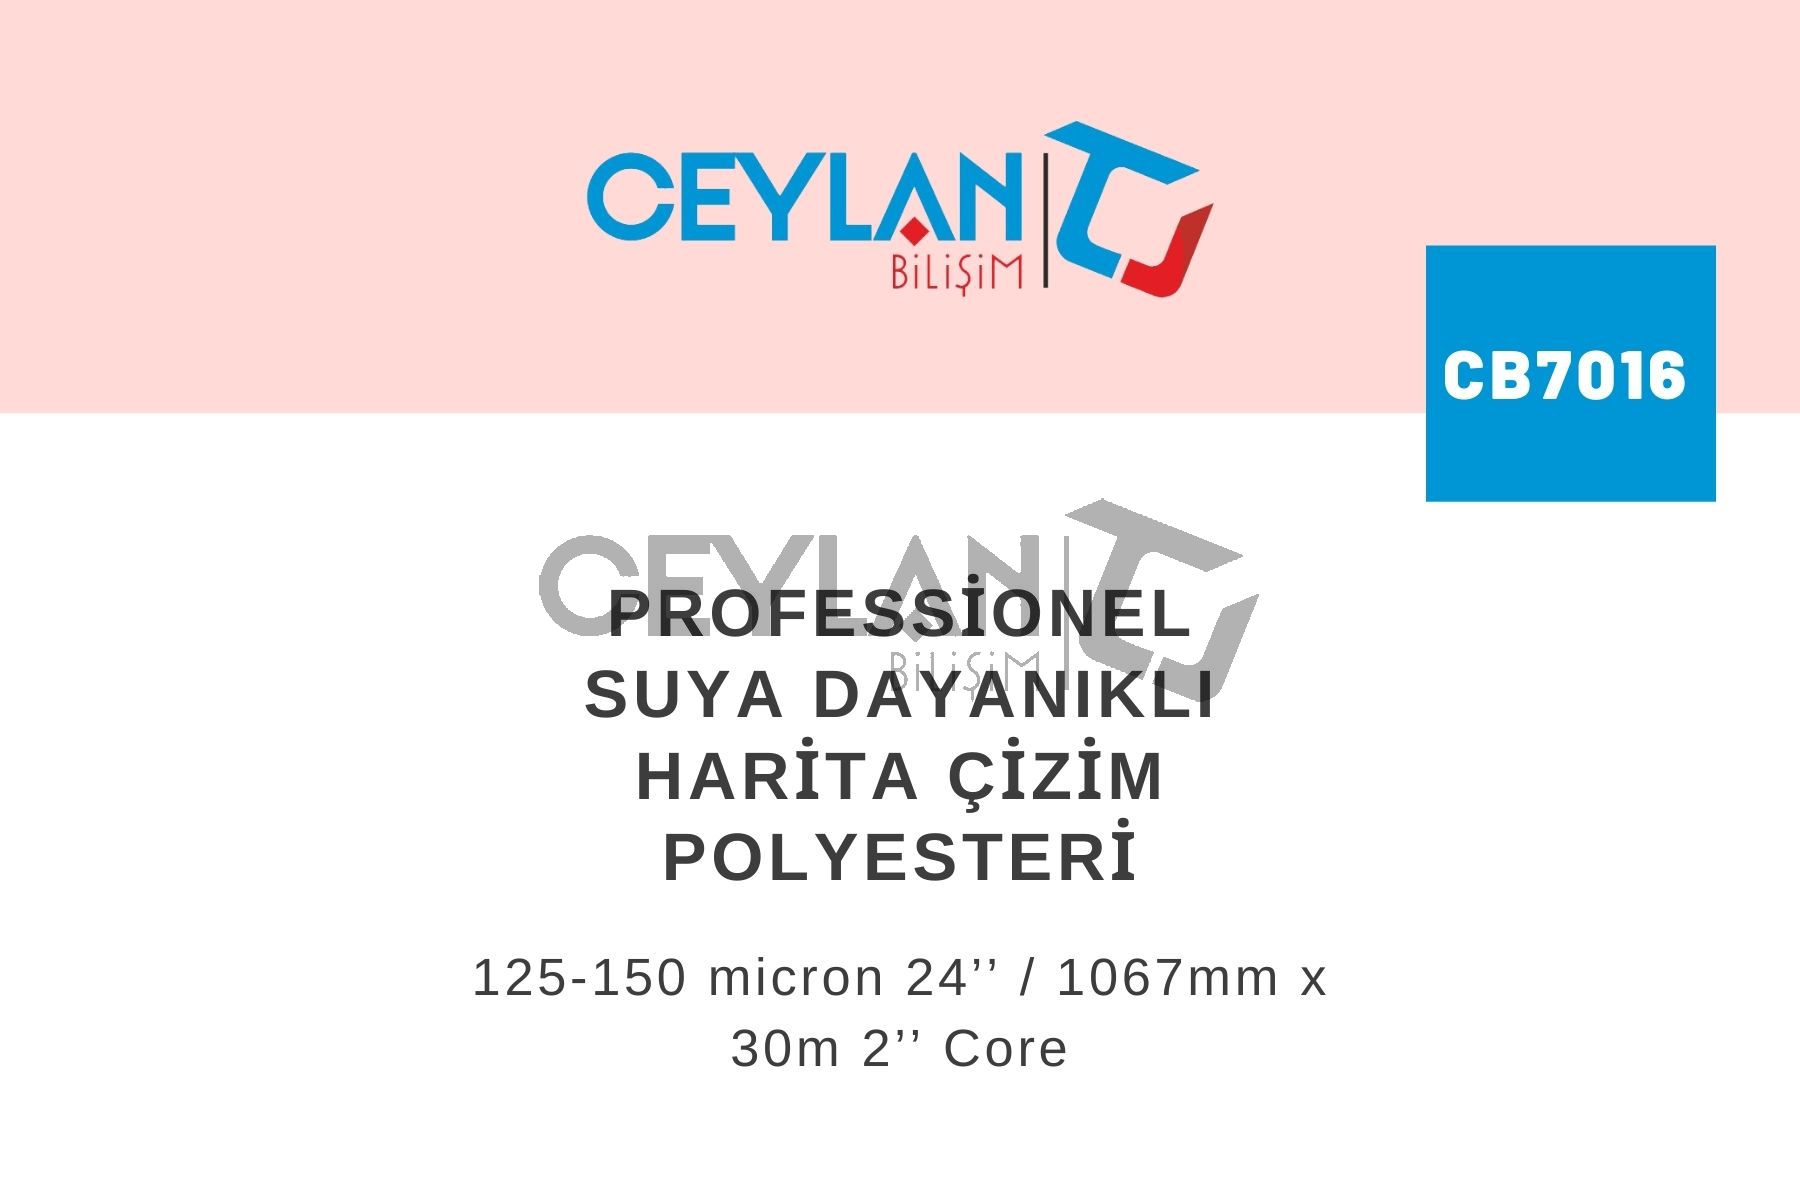 Professionel Suya Dayanıklı Harita Çizim Polyesteri 125-150 micron 24’’ / 1067mm x 30m 2’’ Core